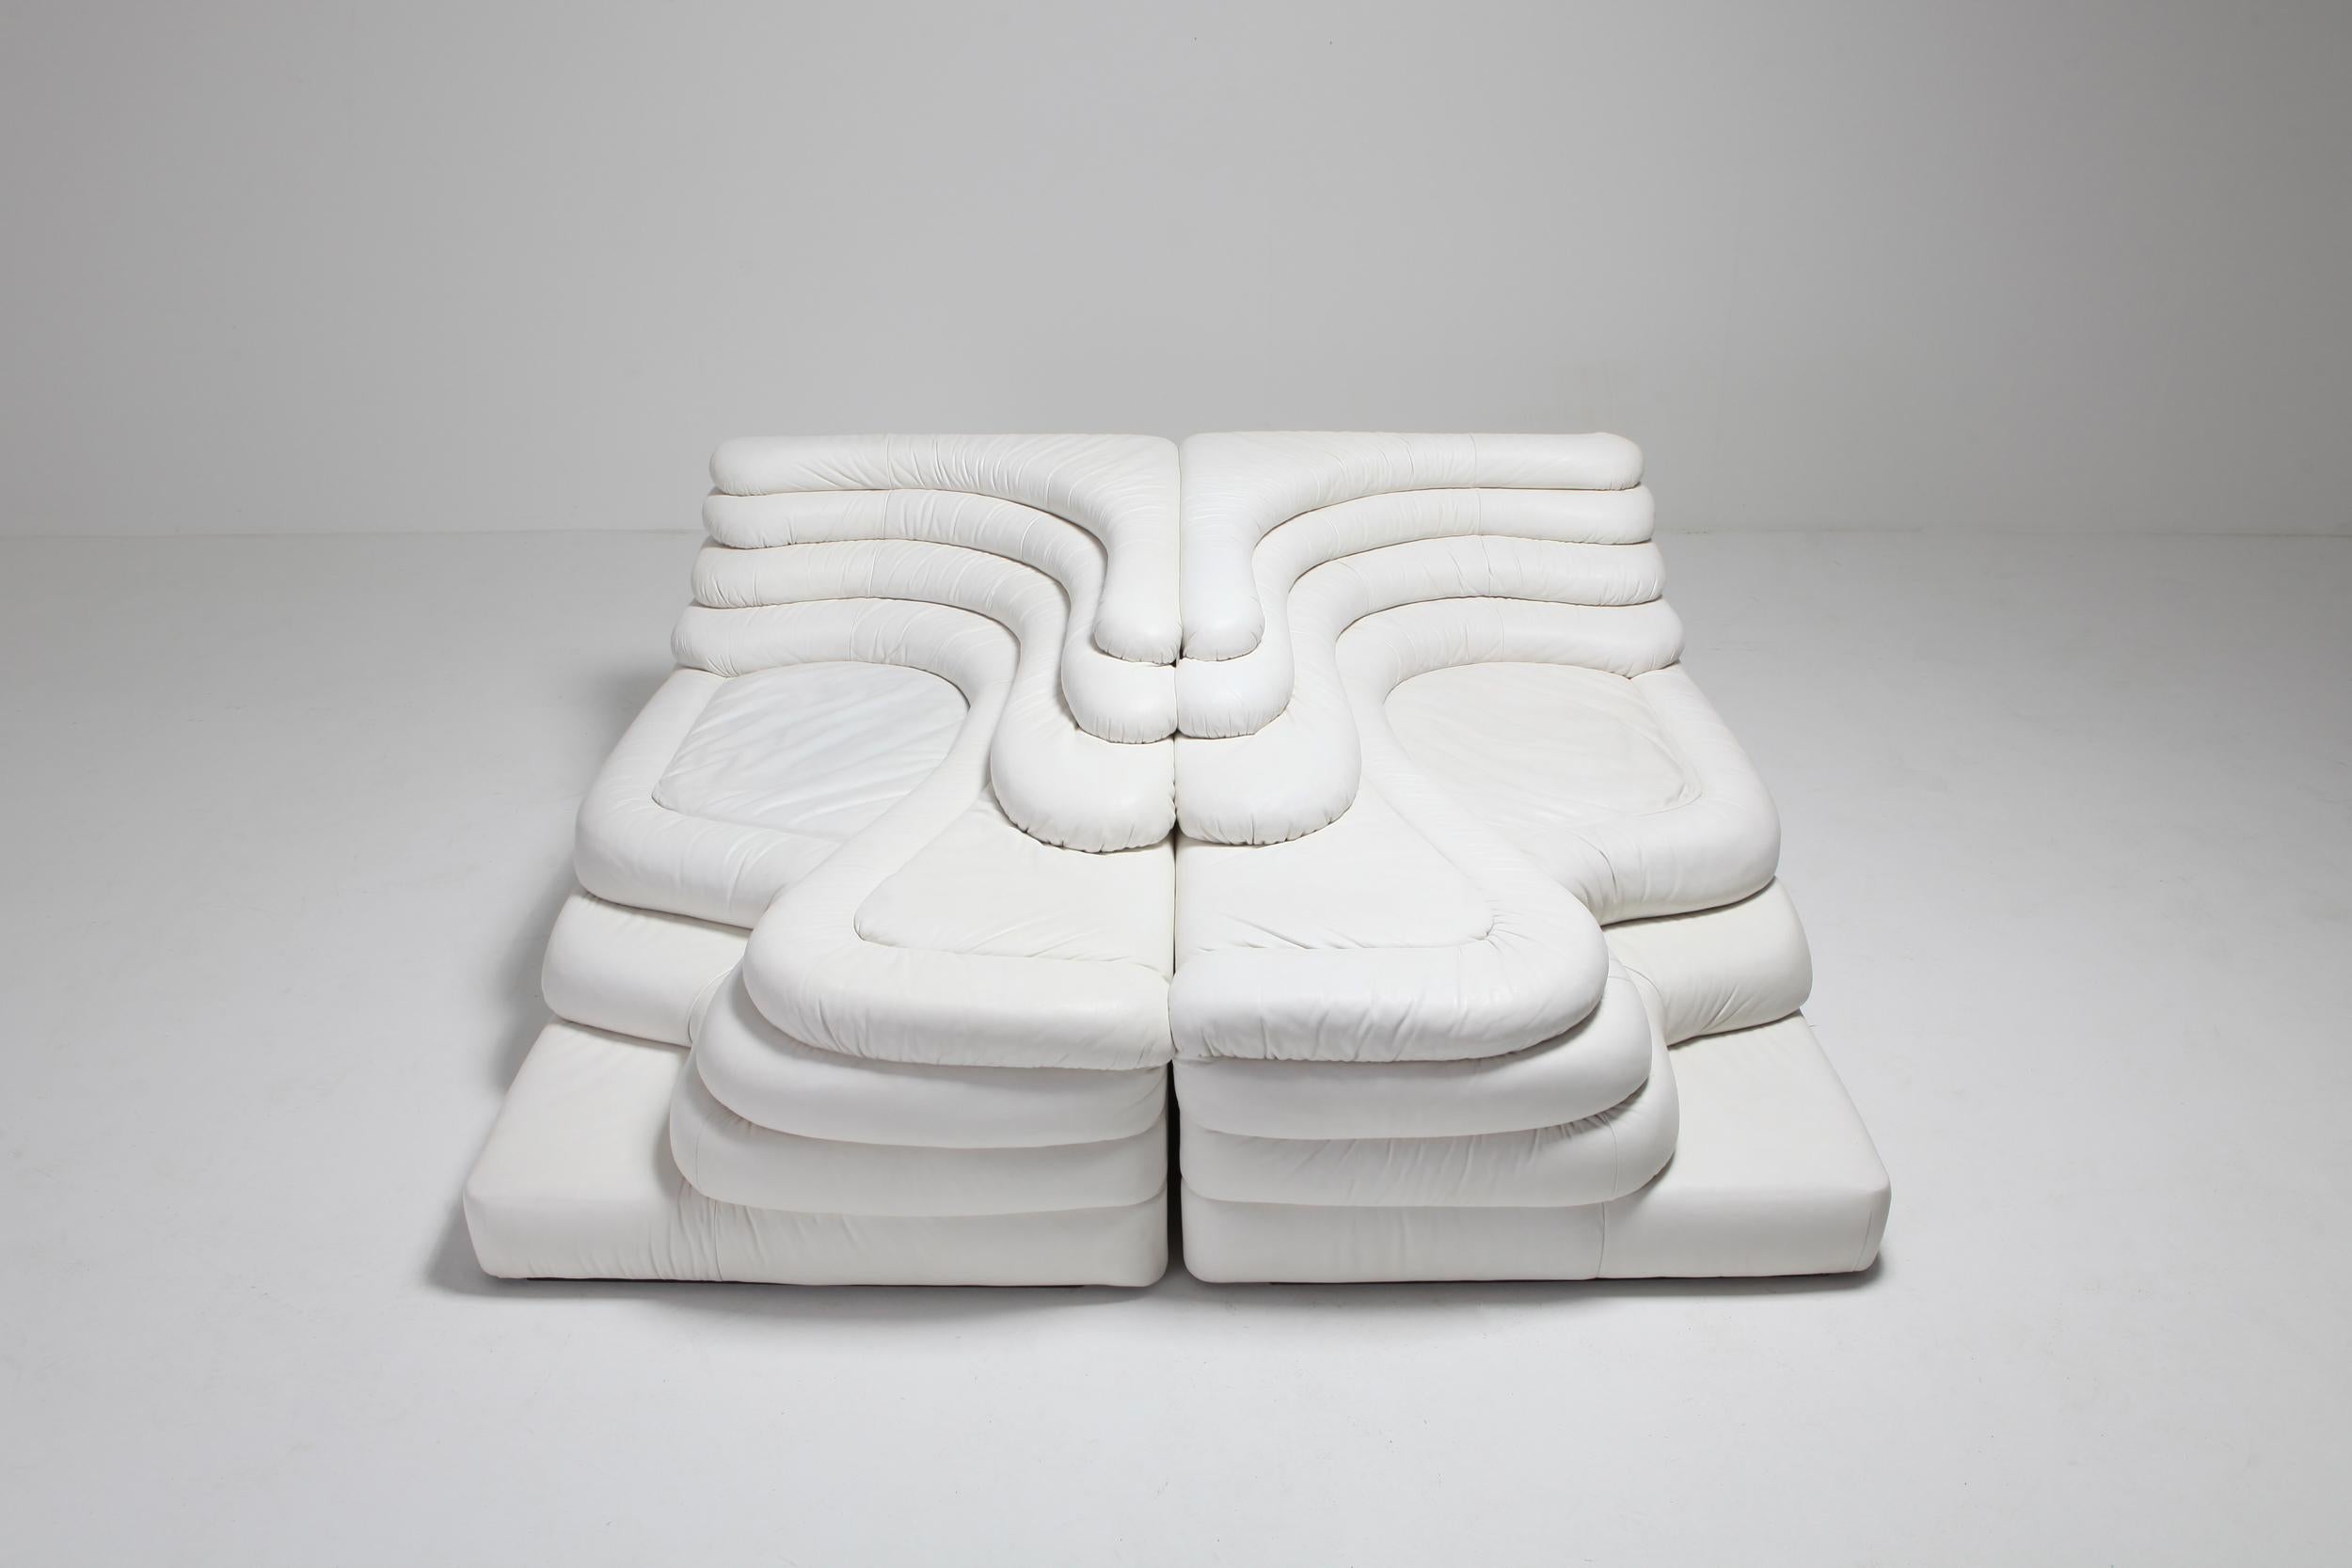 European De Sede 'Terrazza' Sofas DS 1025 in White Leather 1972 by U. Klug & Ueli Berger